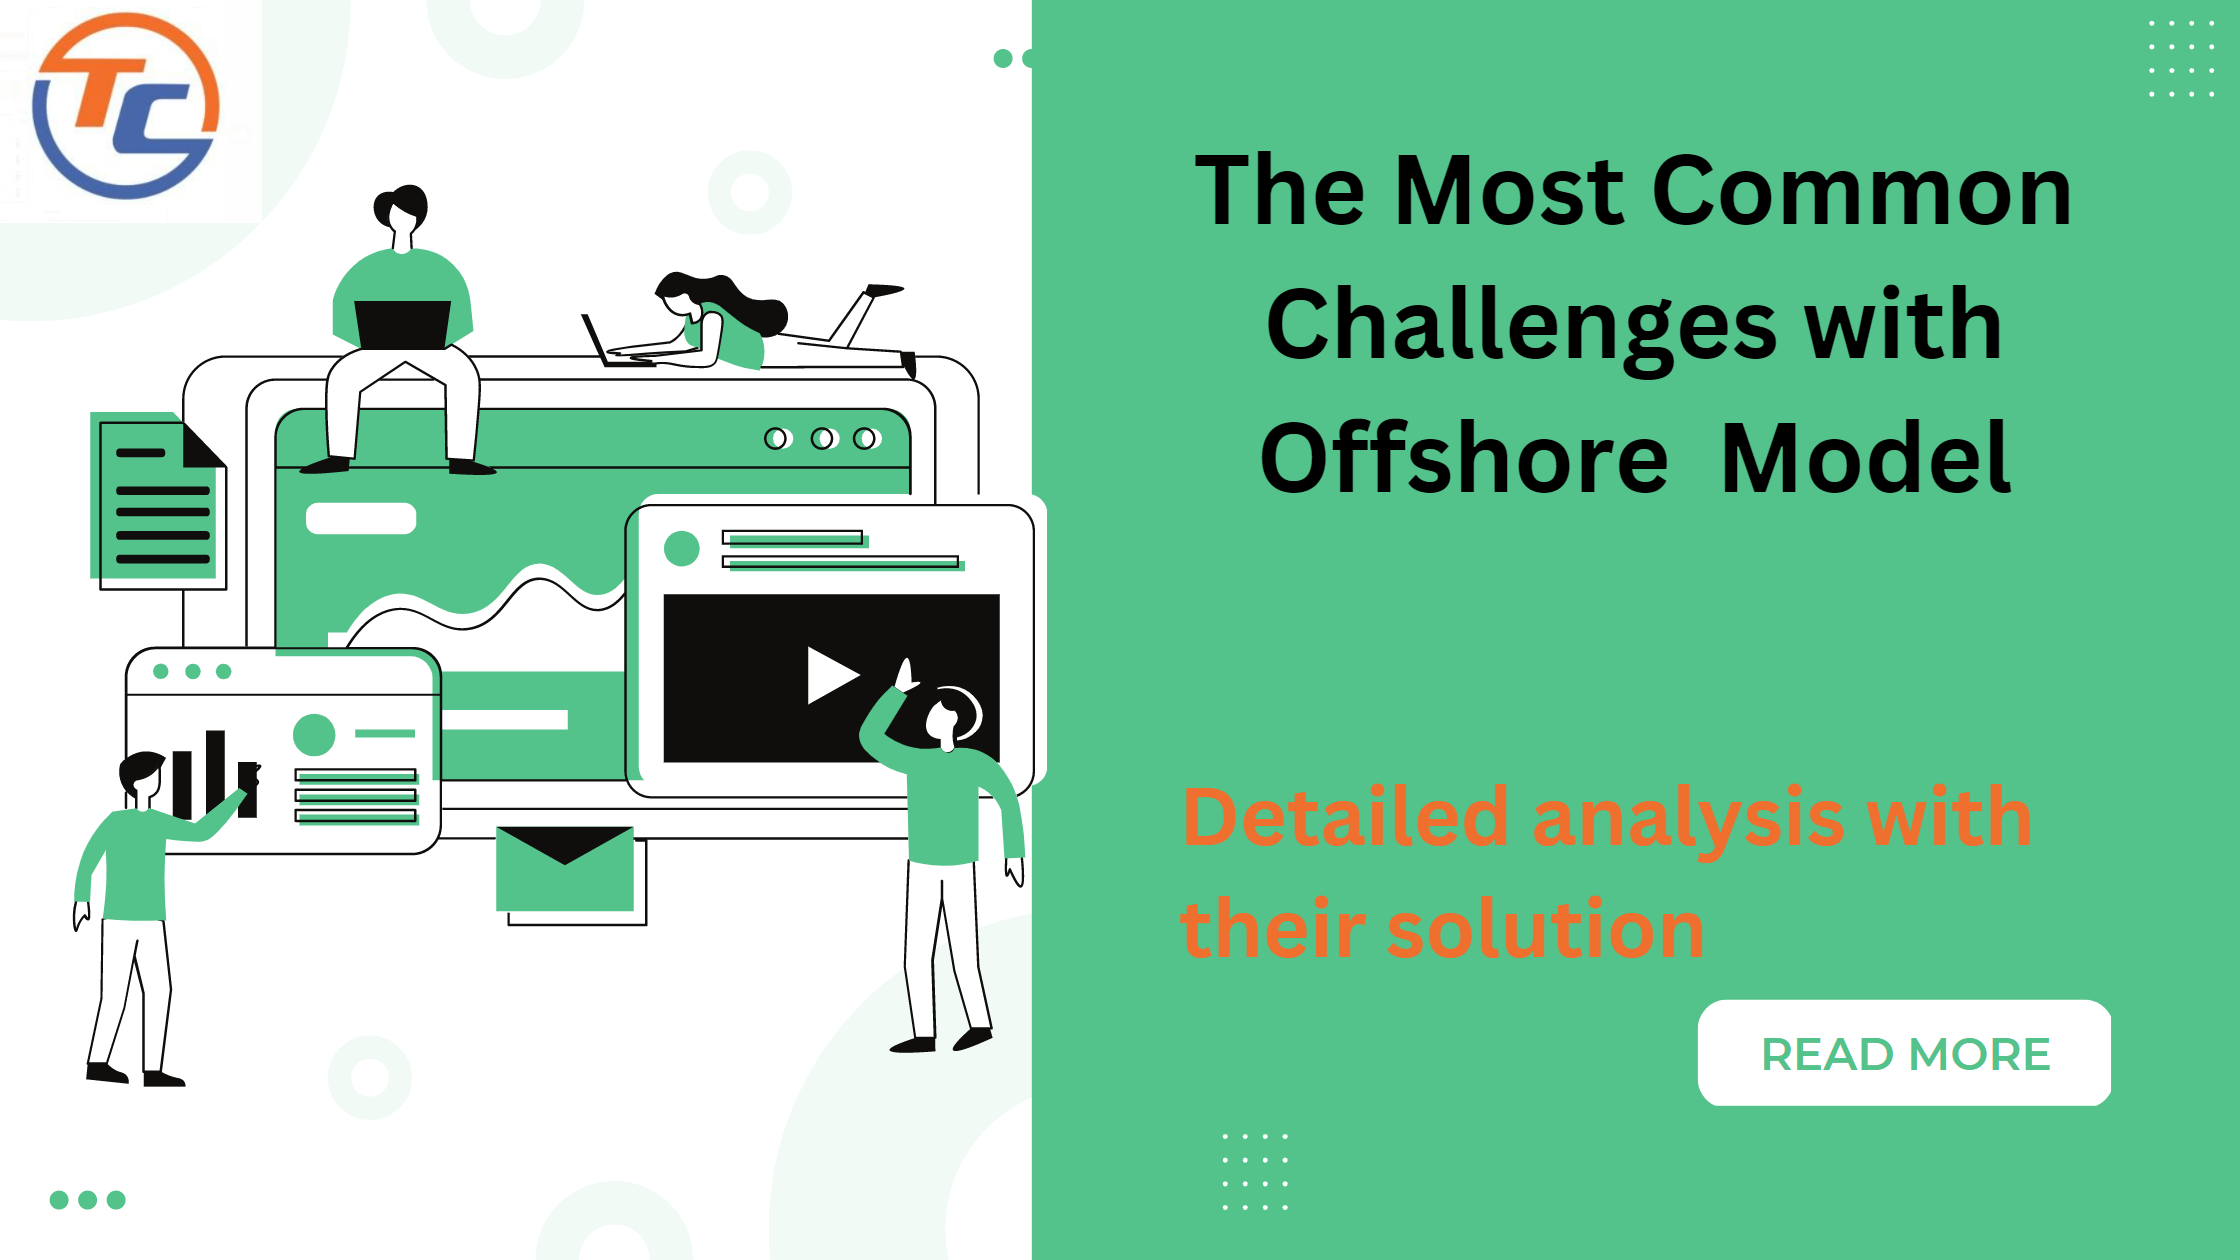 Challenges witjh offshore model